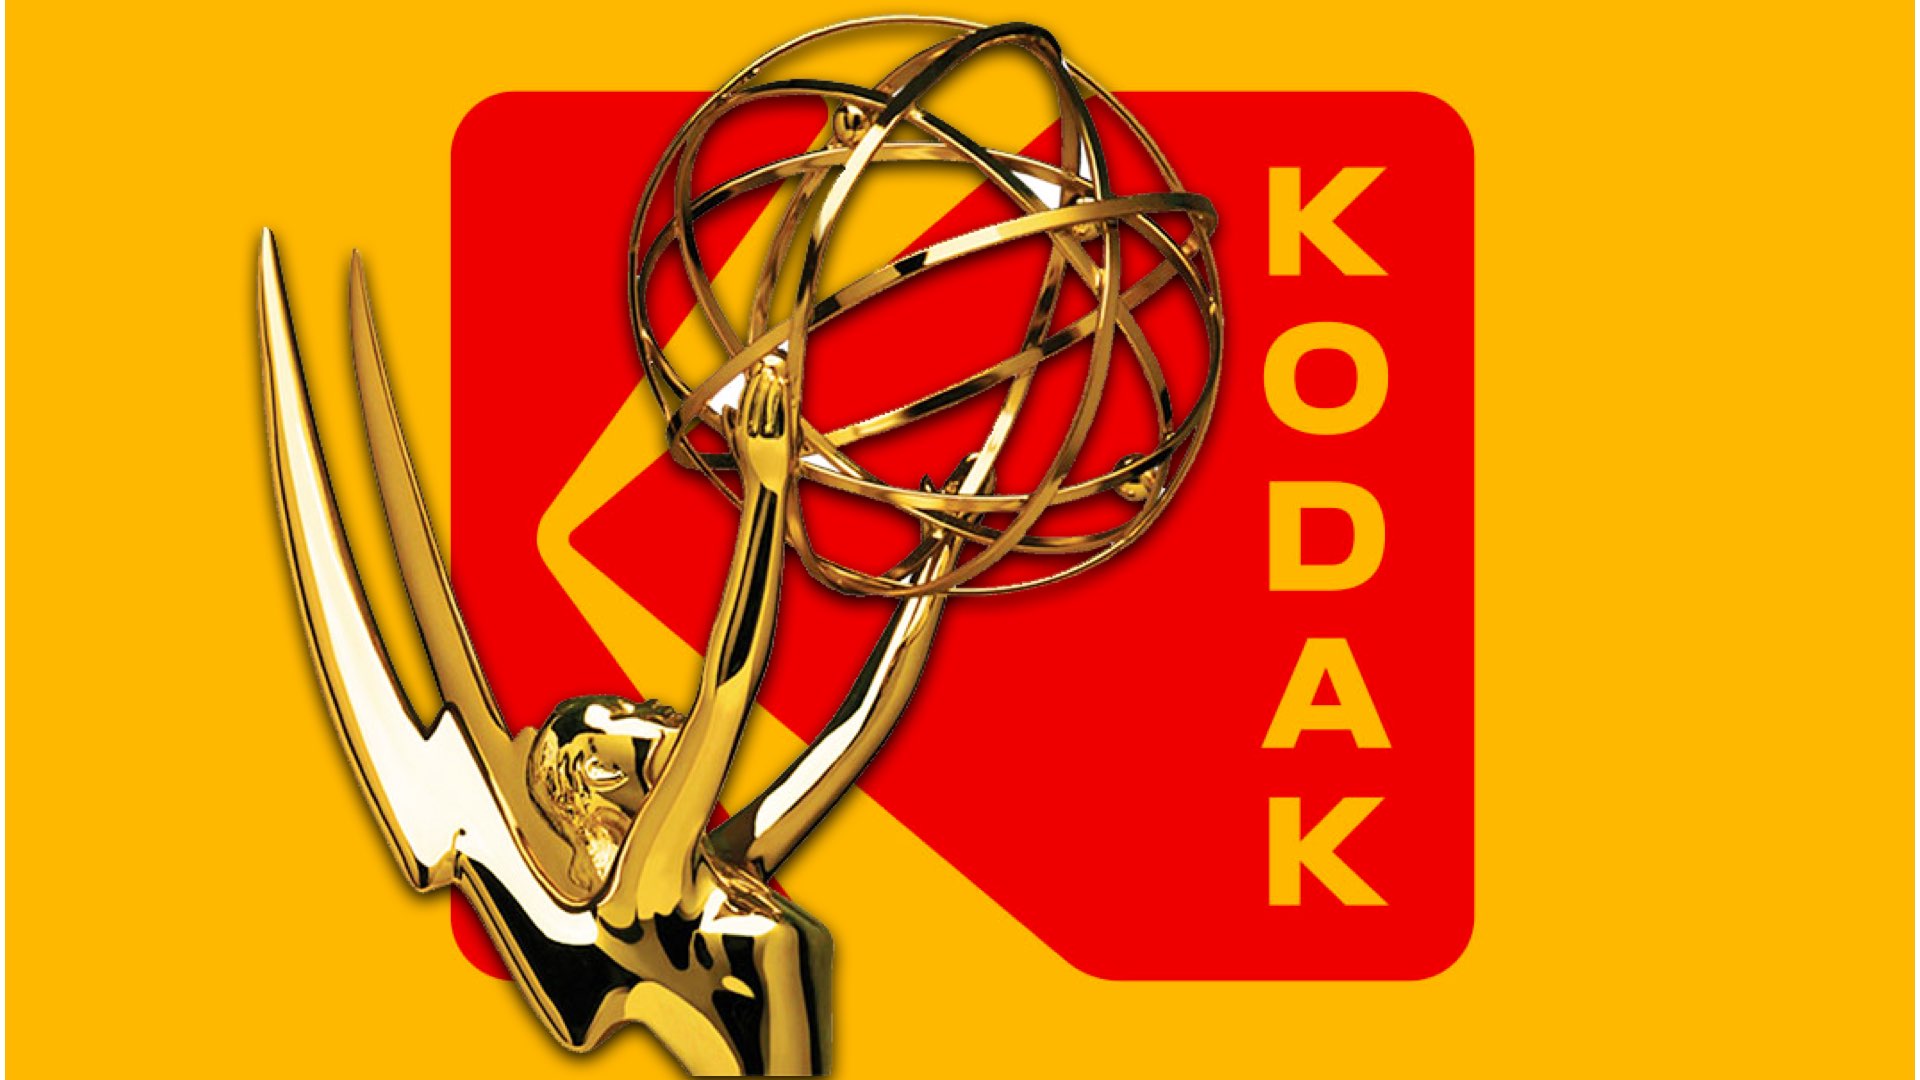 Kodak’s CMOS Image Sensors Take the Emmy